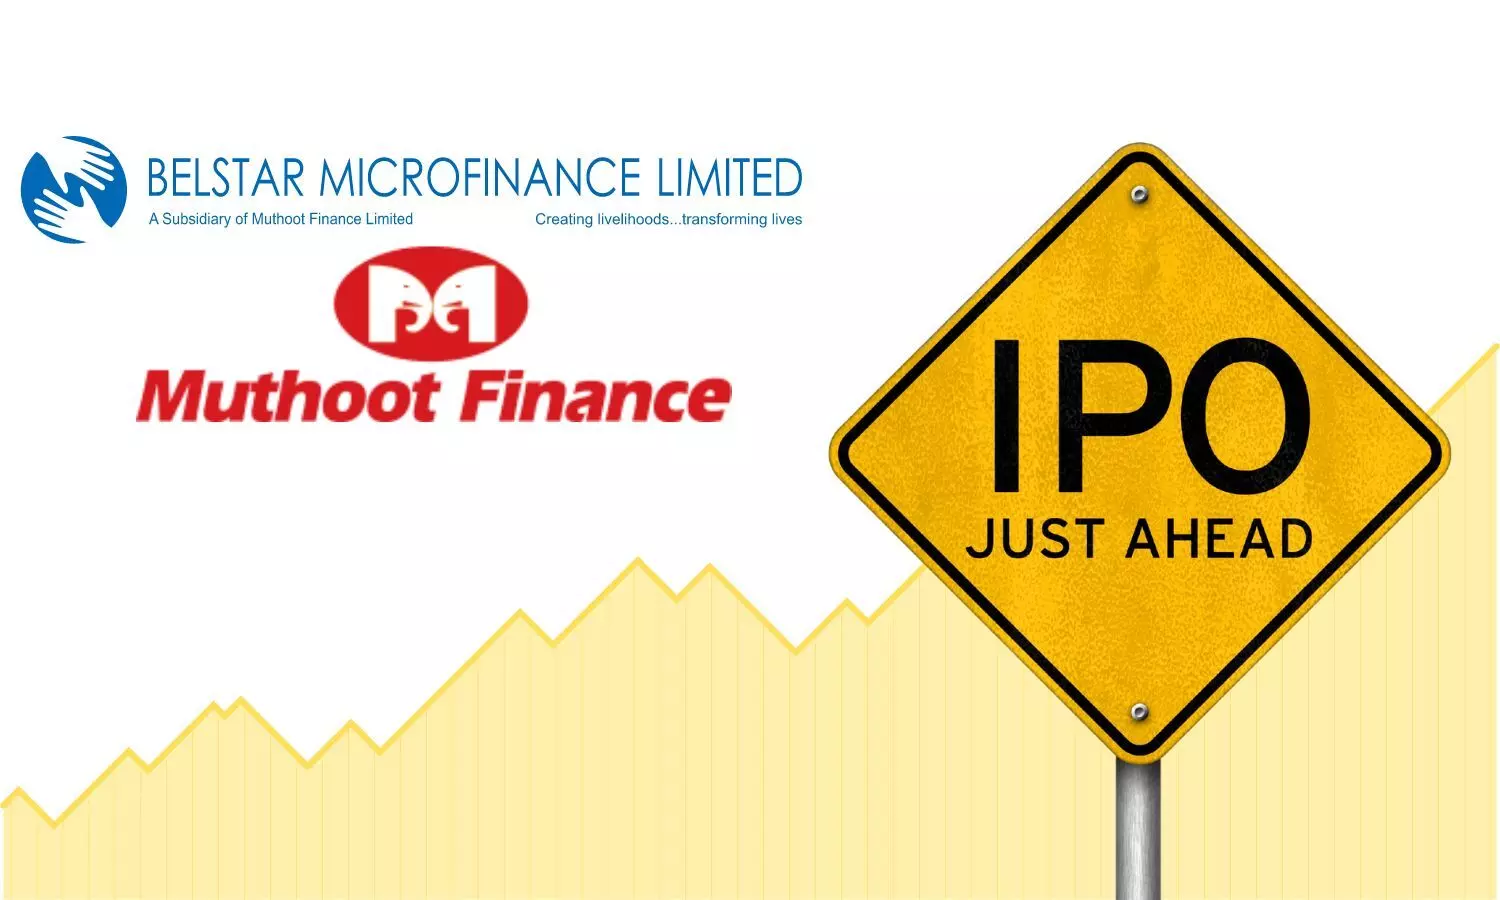 Muthoot Finance logo, IPO, Belstar logo